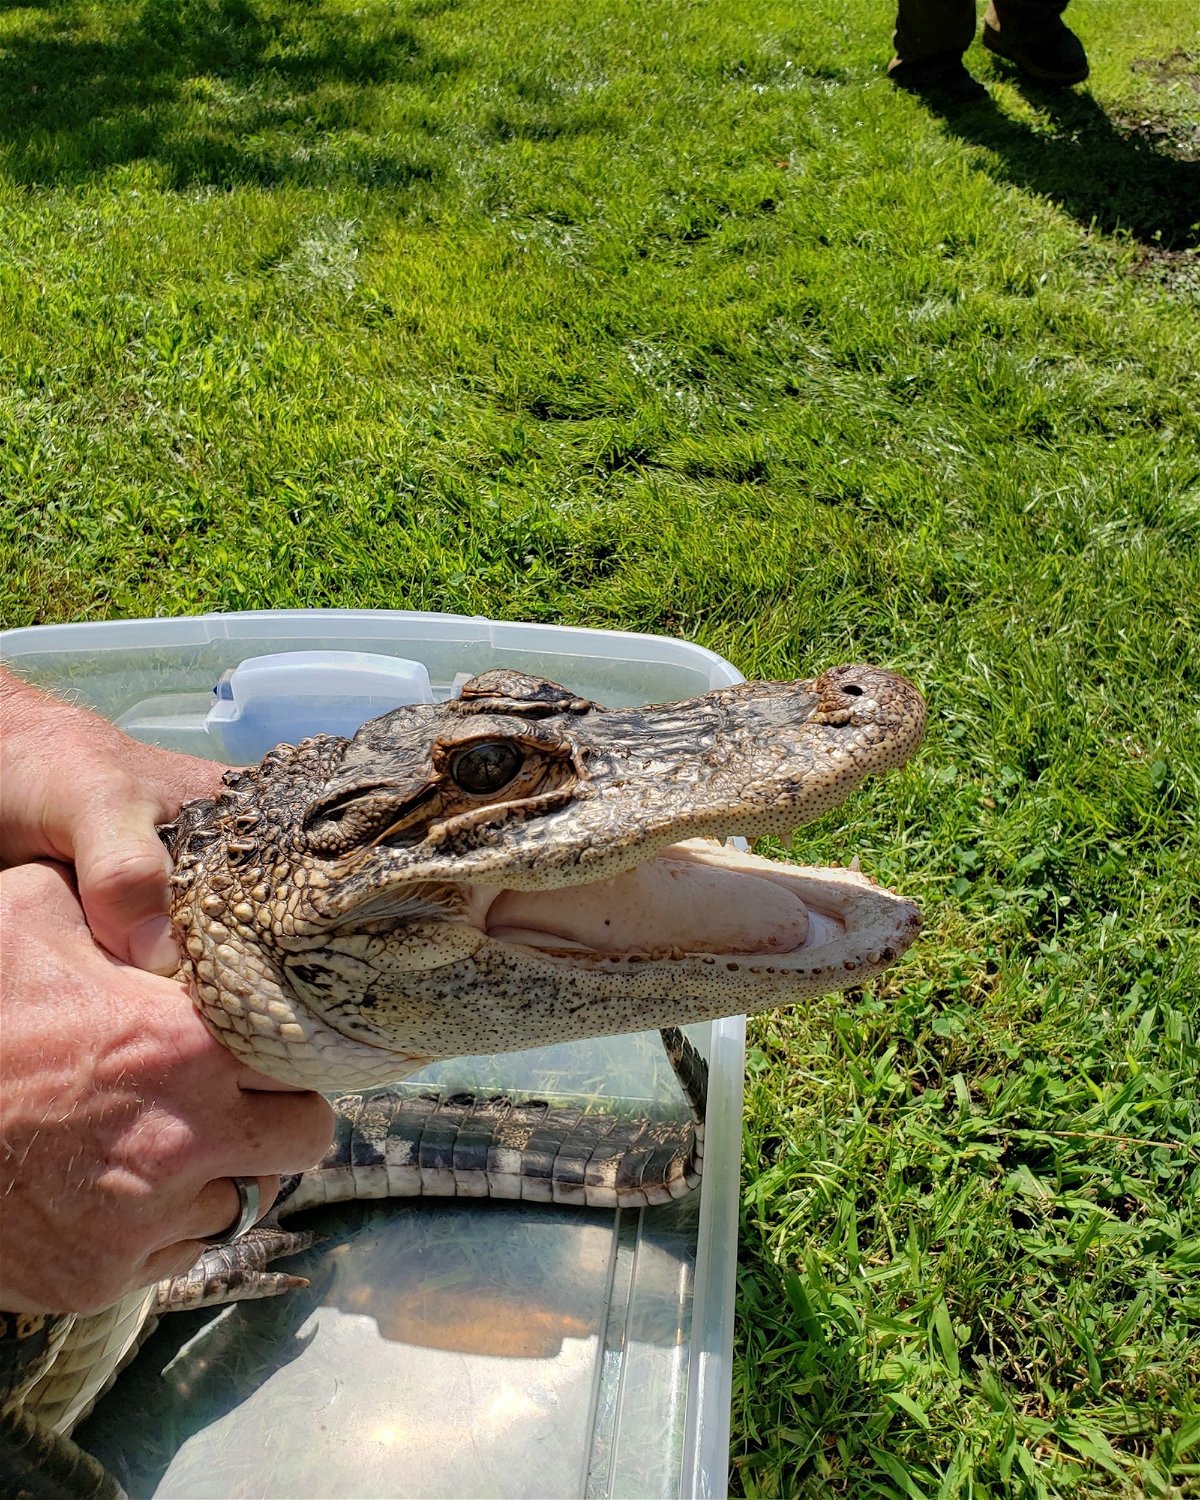 florida state reptile alligator